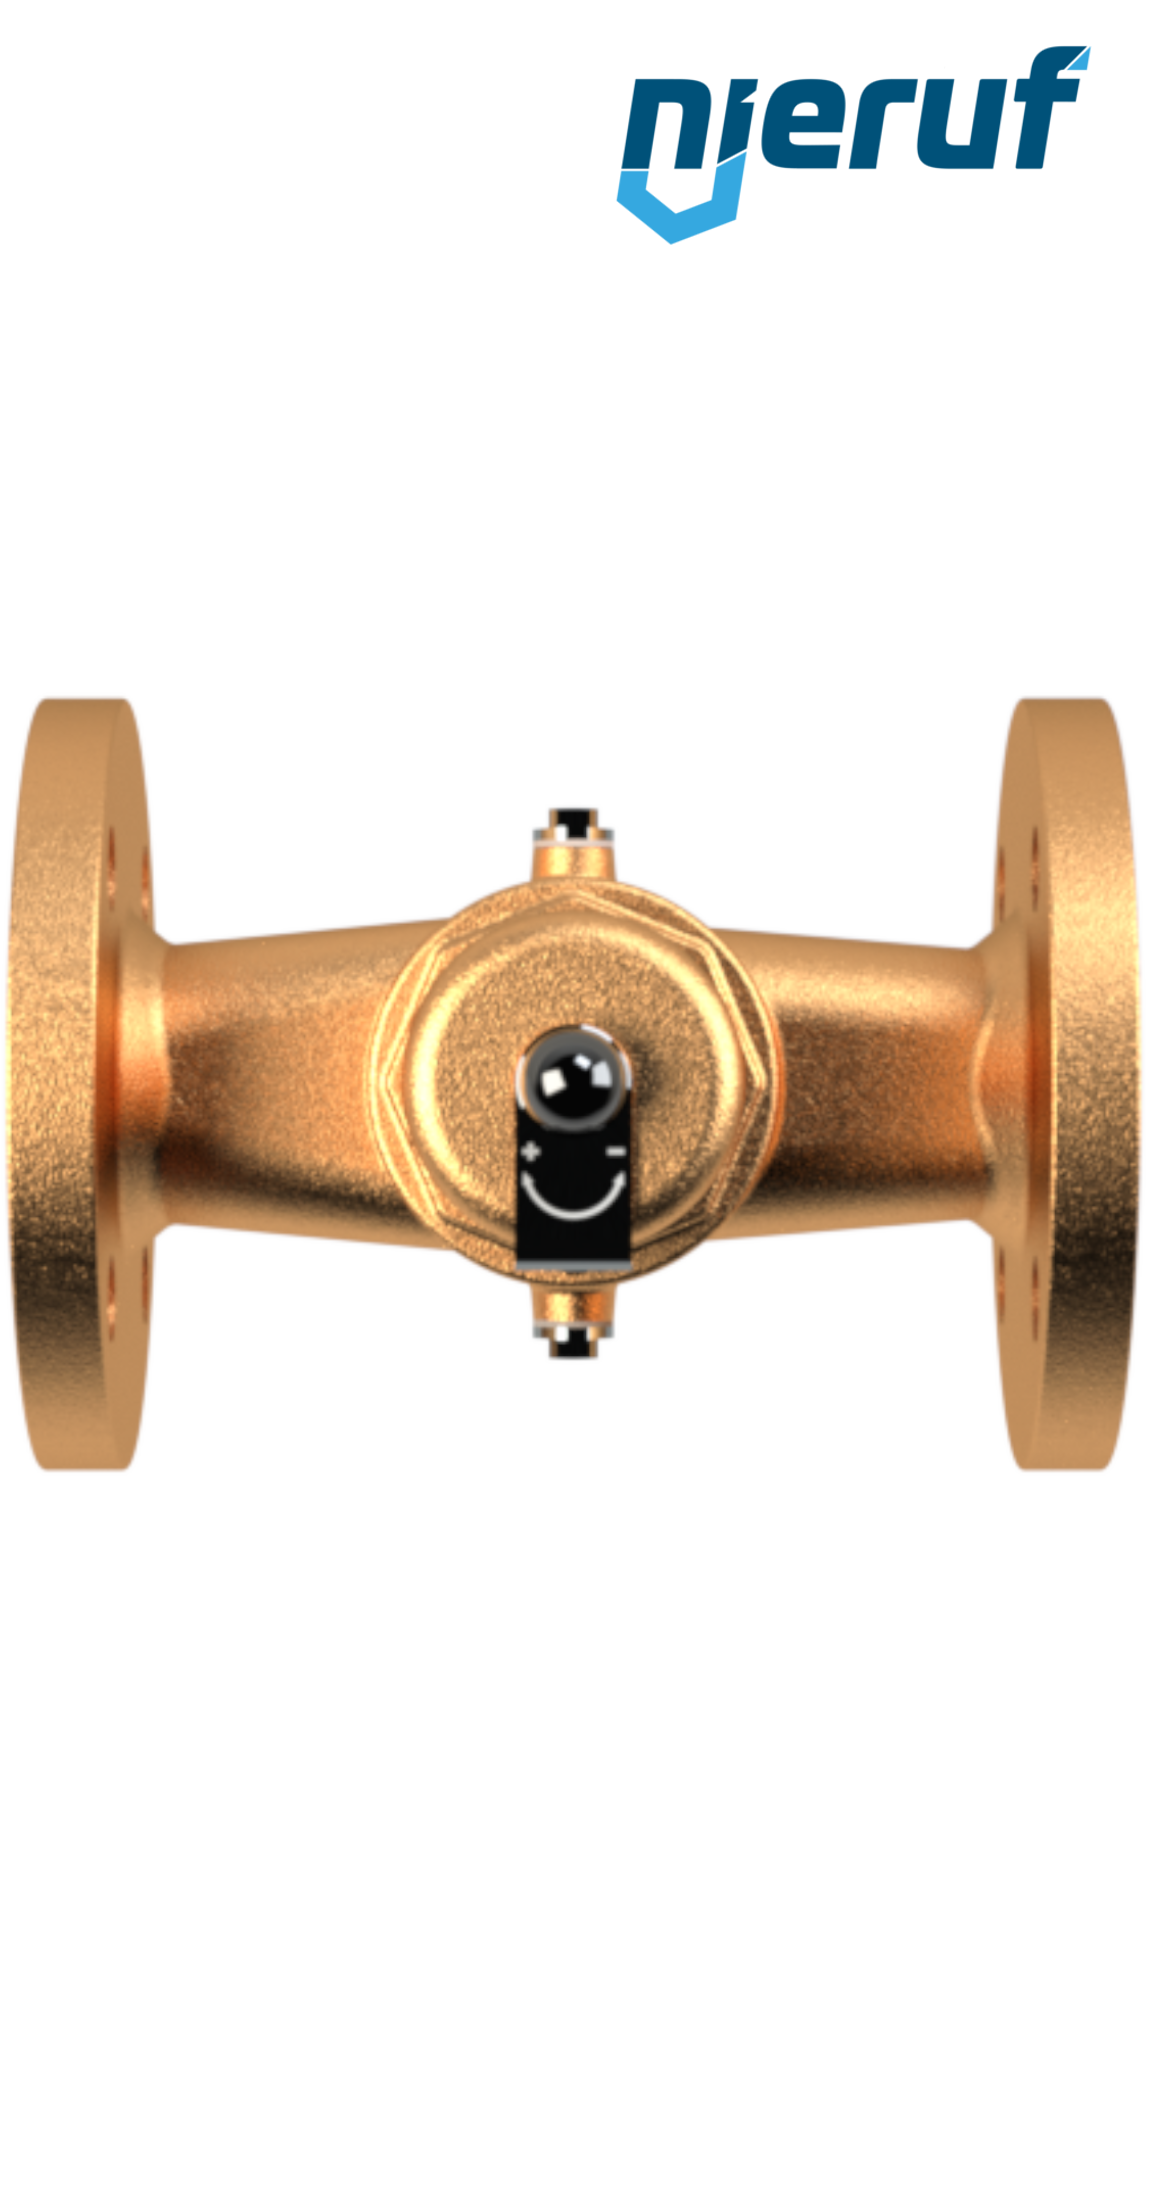 pressure reducing valve DN 40 PN16 DM06 gunmetal/brass FKM 0.5 - 2.0 bar